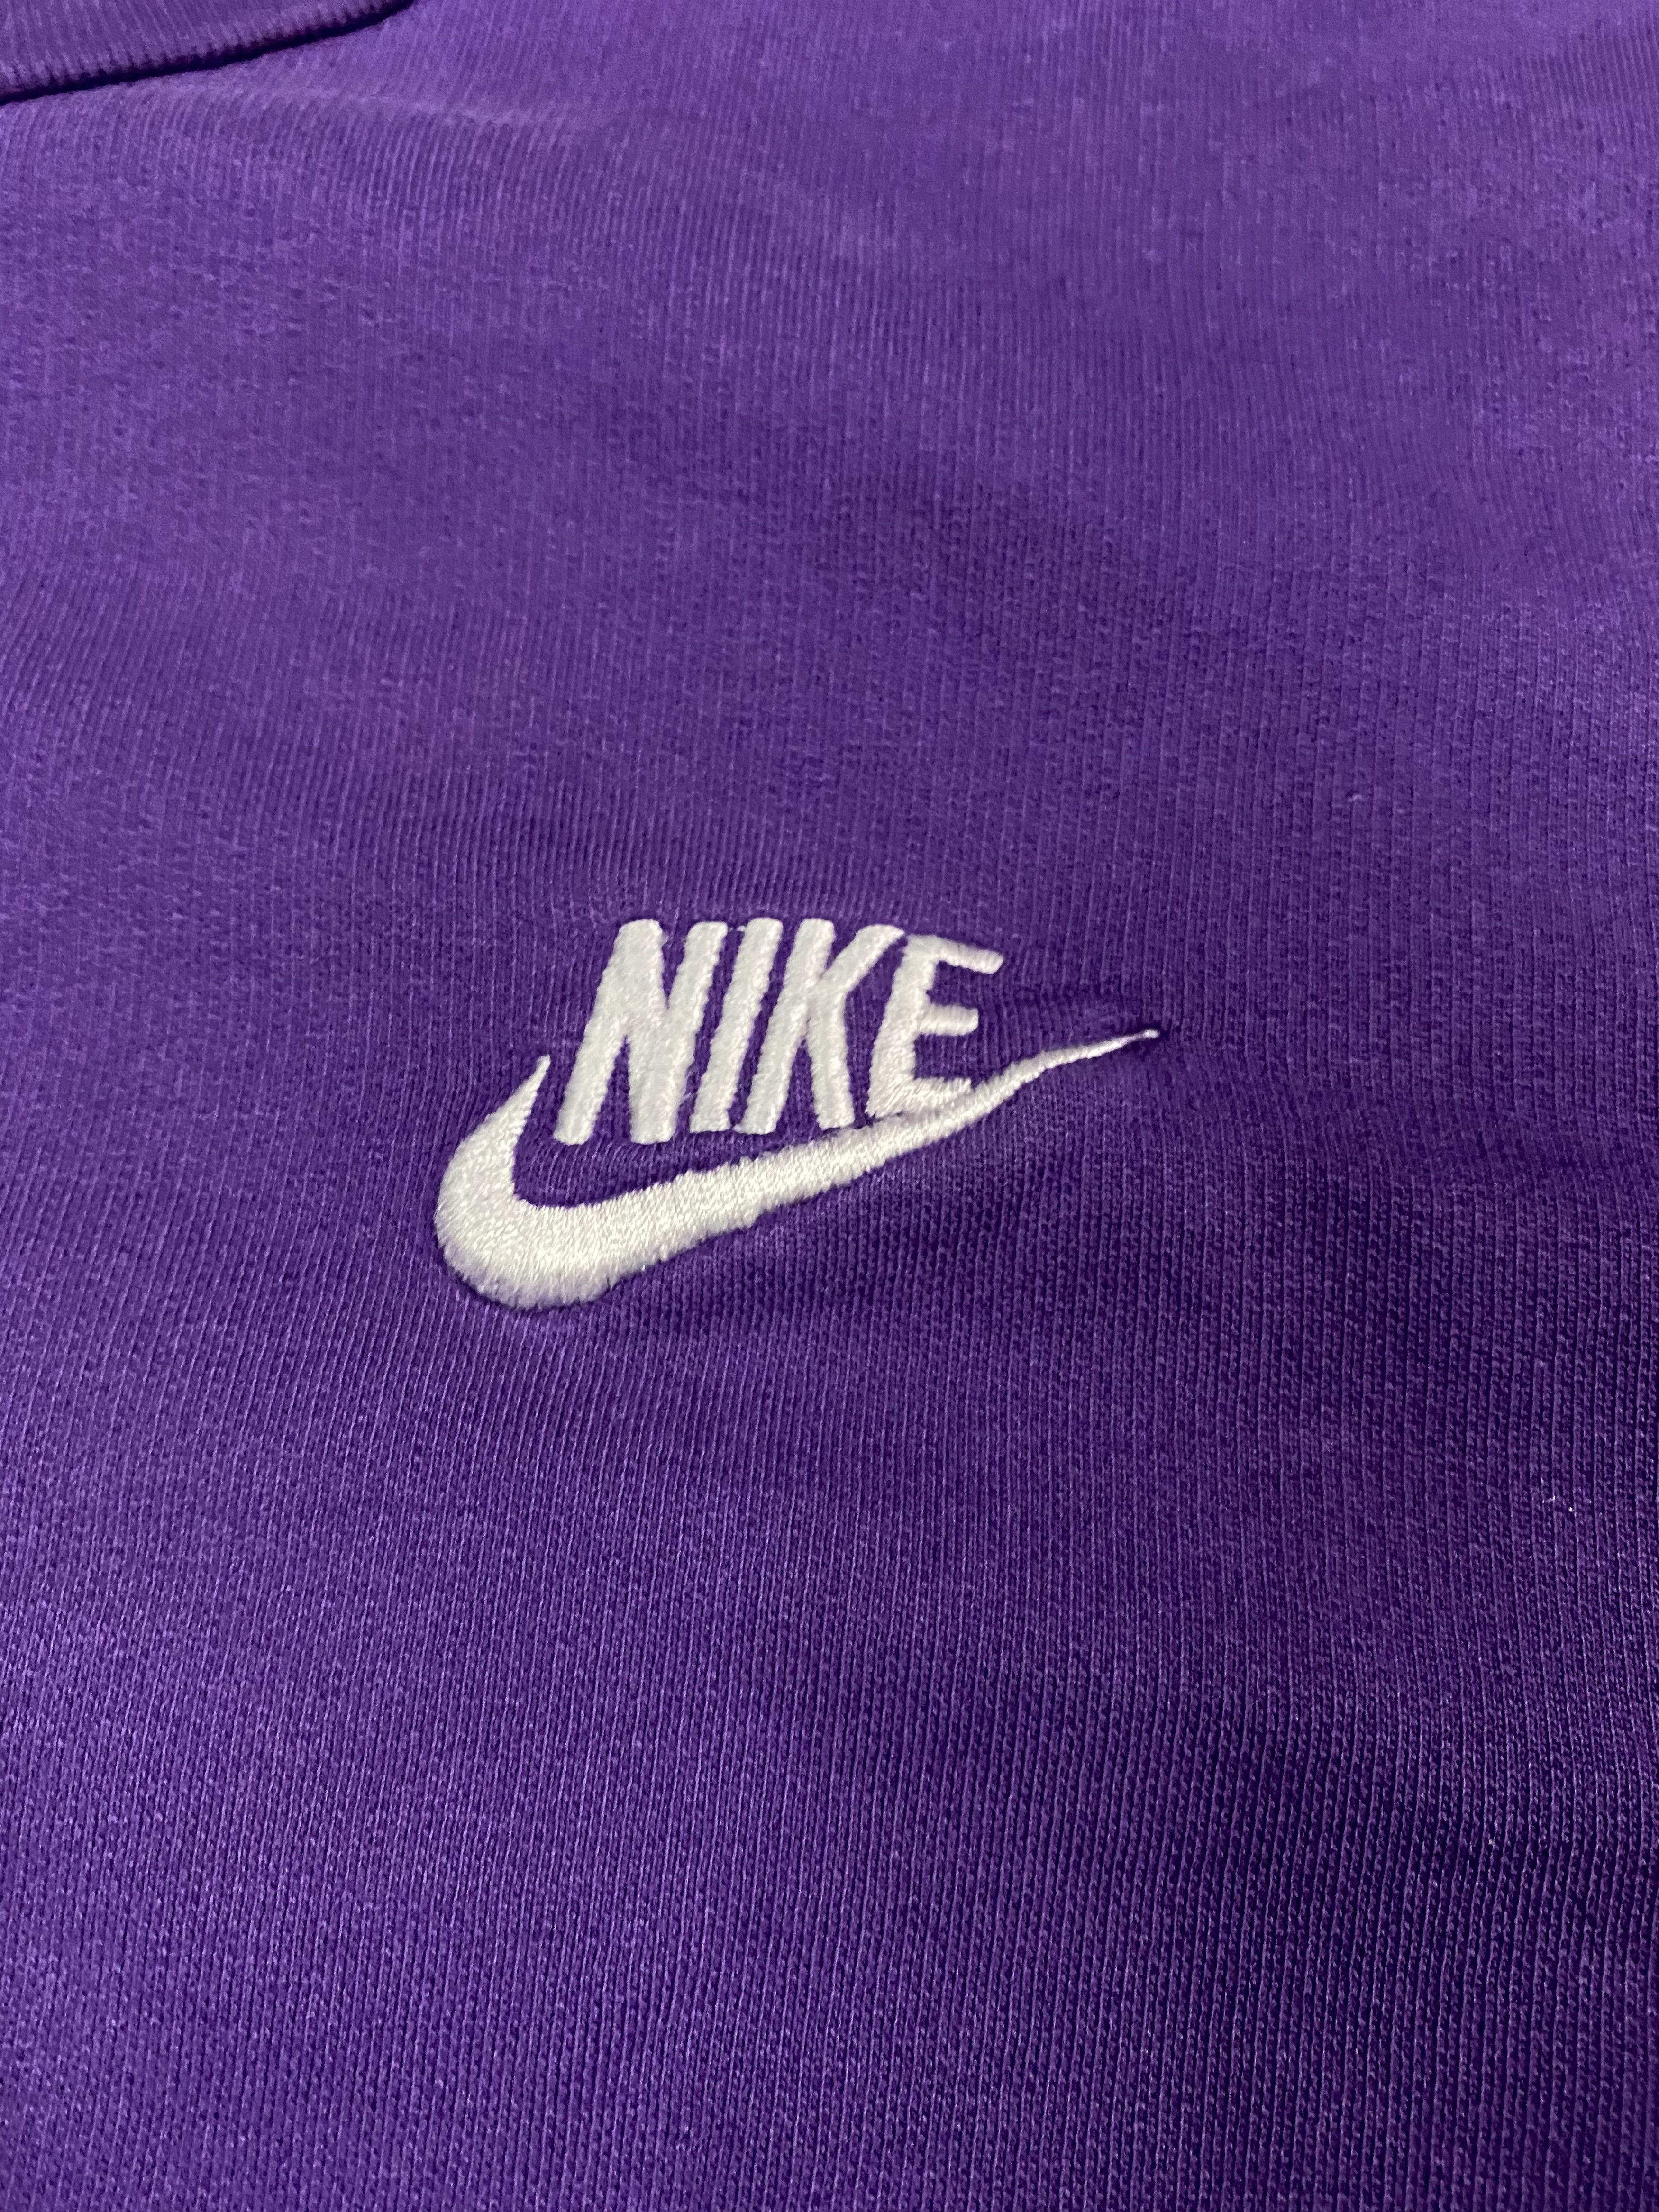 Nike Vintage Nike Sweatshirt Size US L / EU 52-54 / 3 - 6 Thumbnail